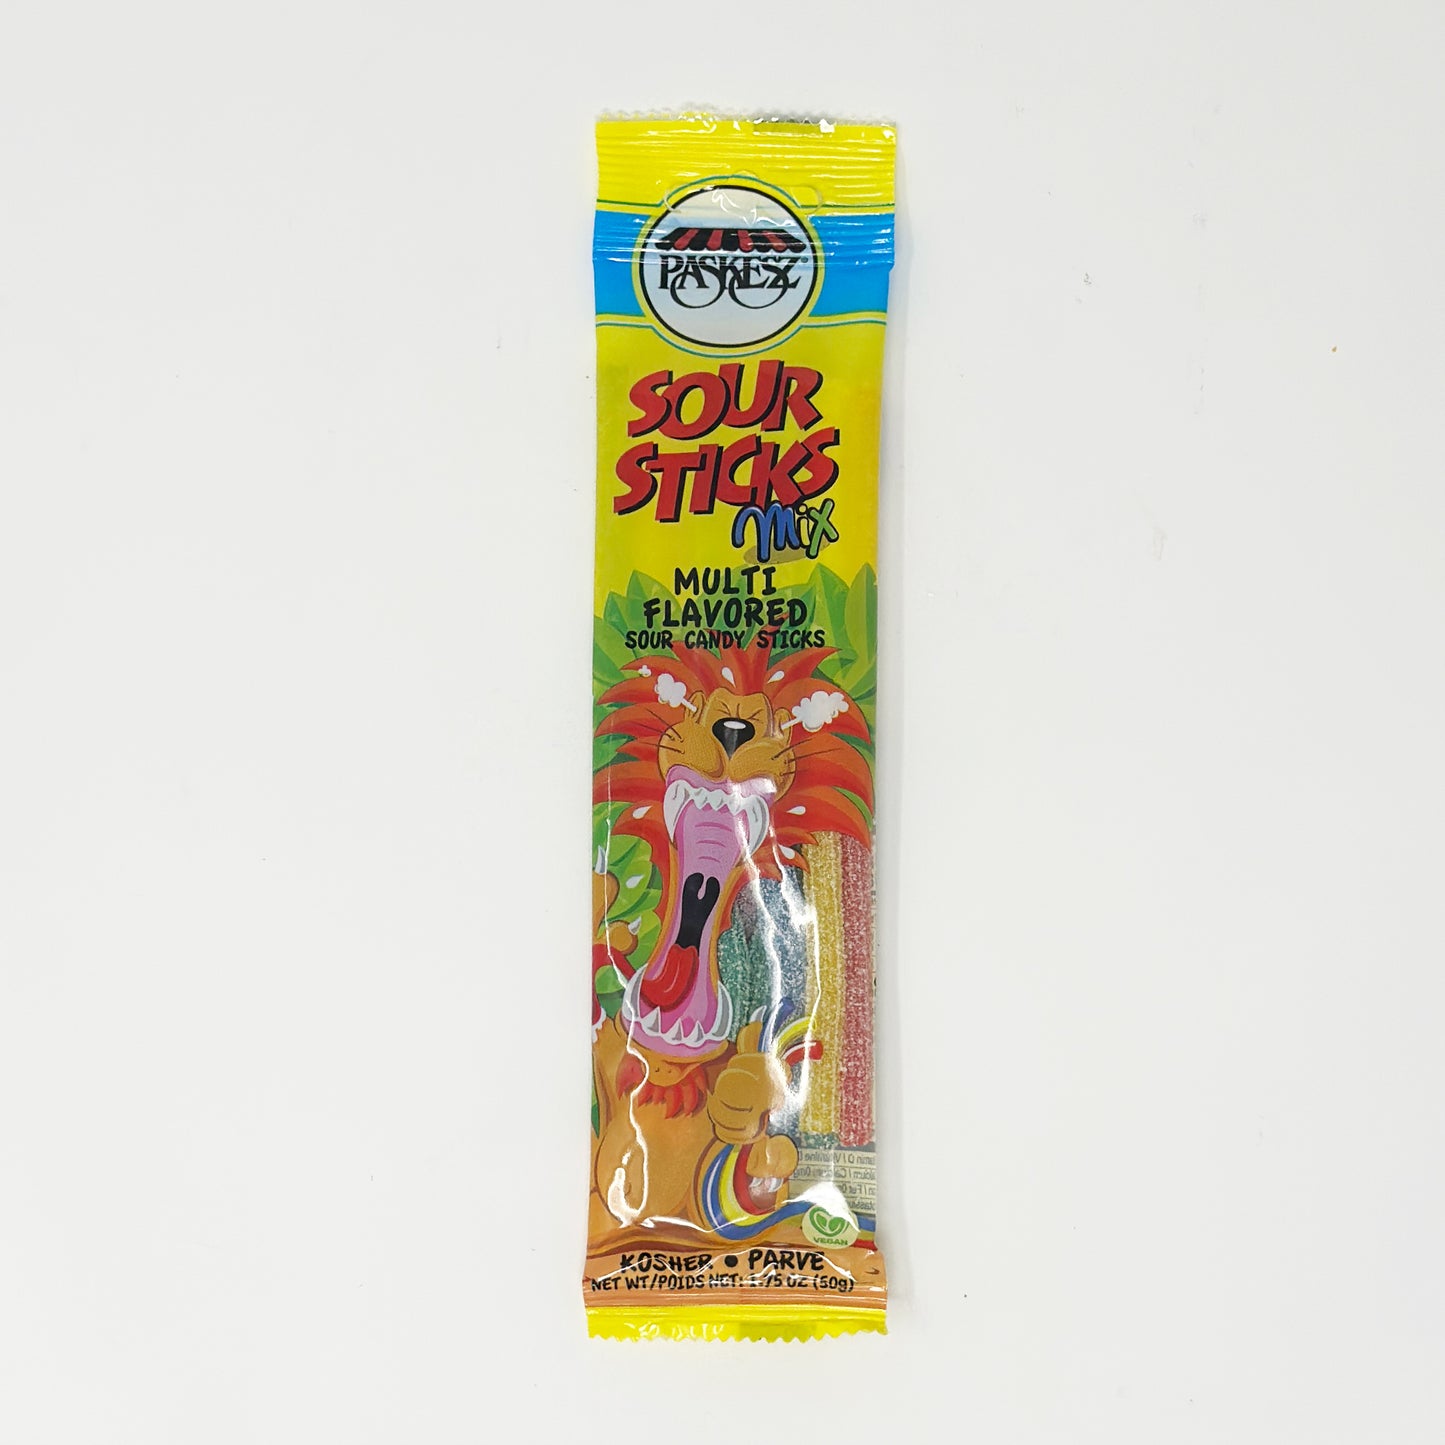 Paskesz Sour Sticks Mix 1.75 oz